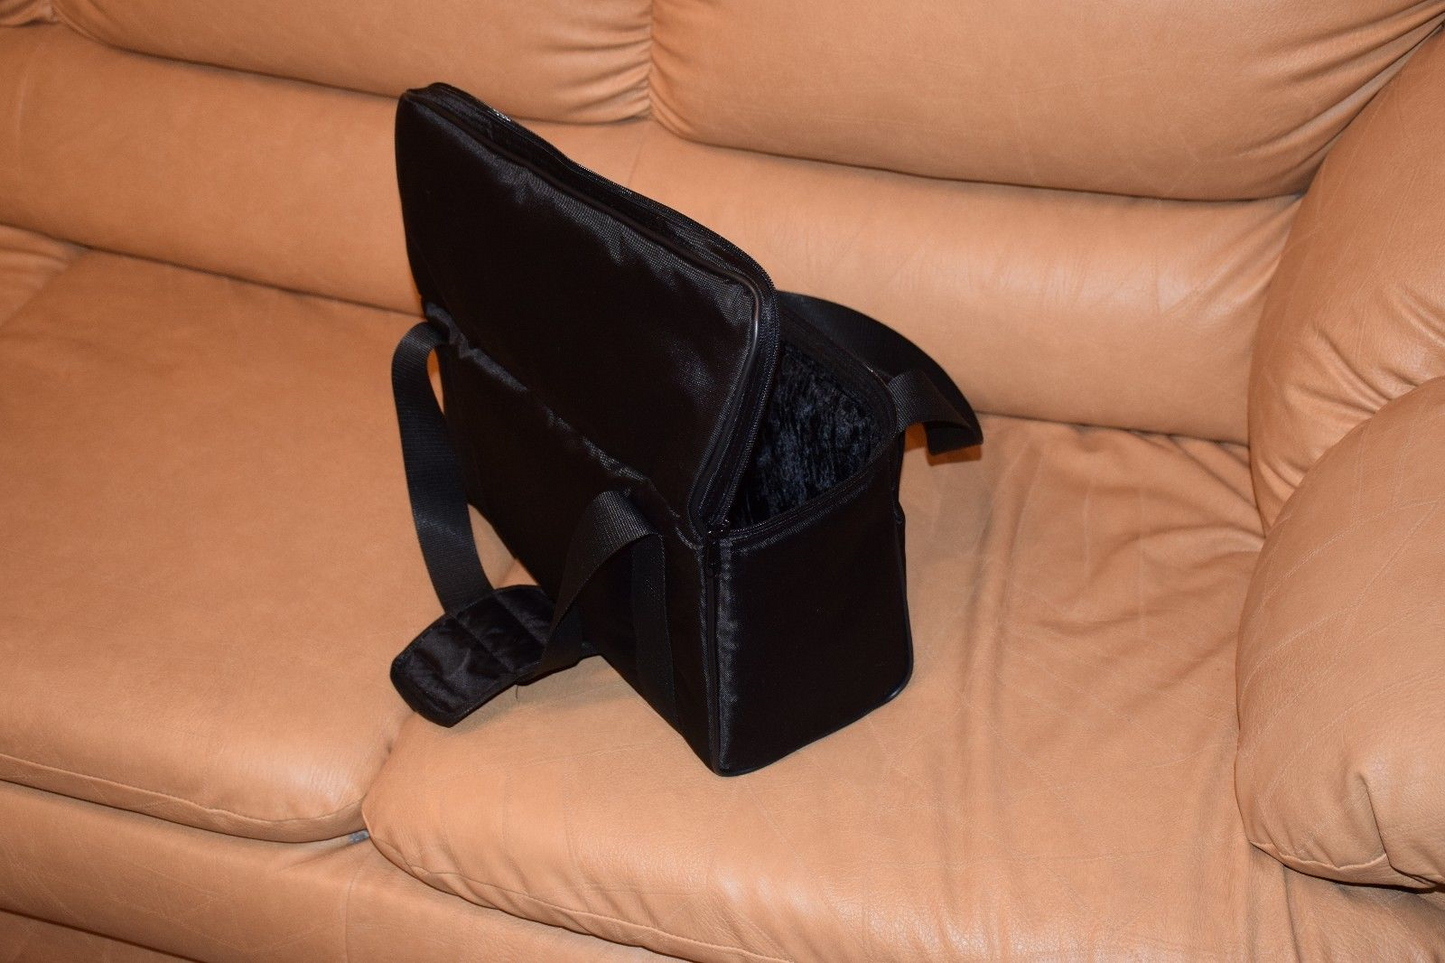 Custom dual-padded bag for PEAVEY Classic 20 MH Mini Head